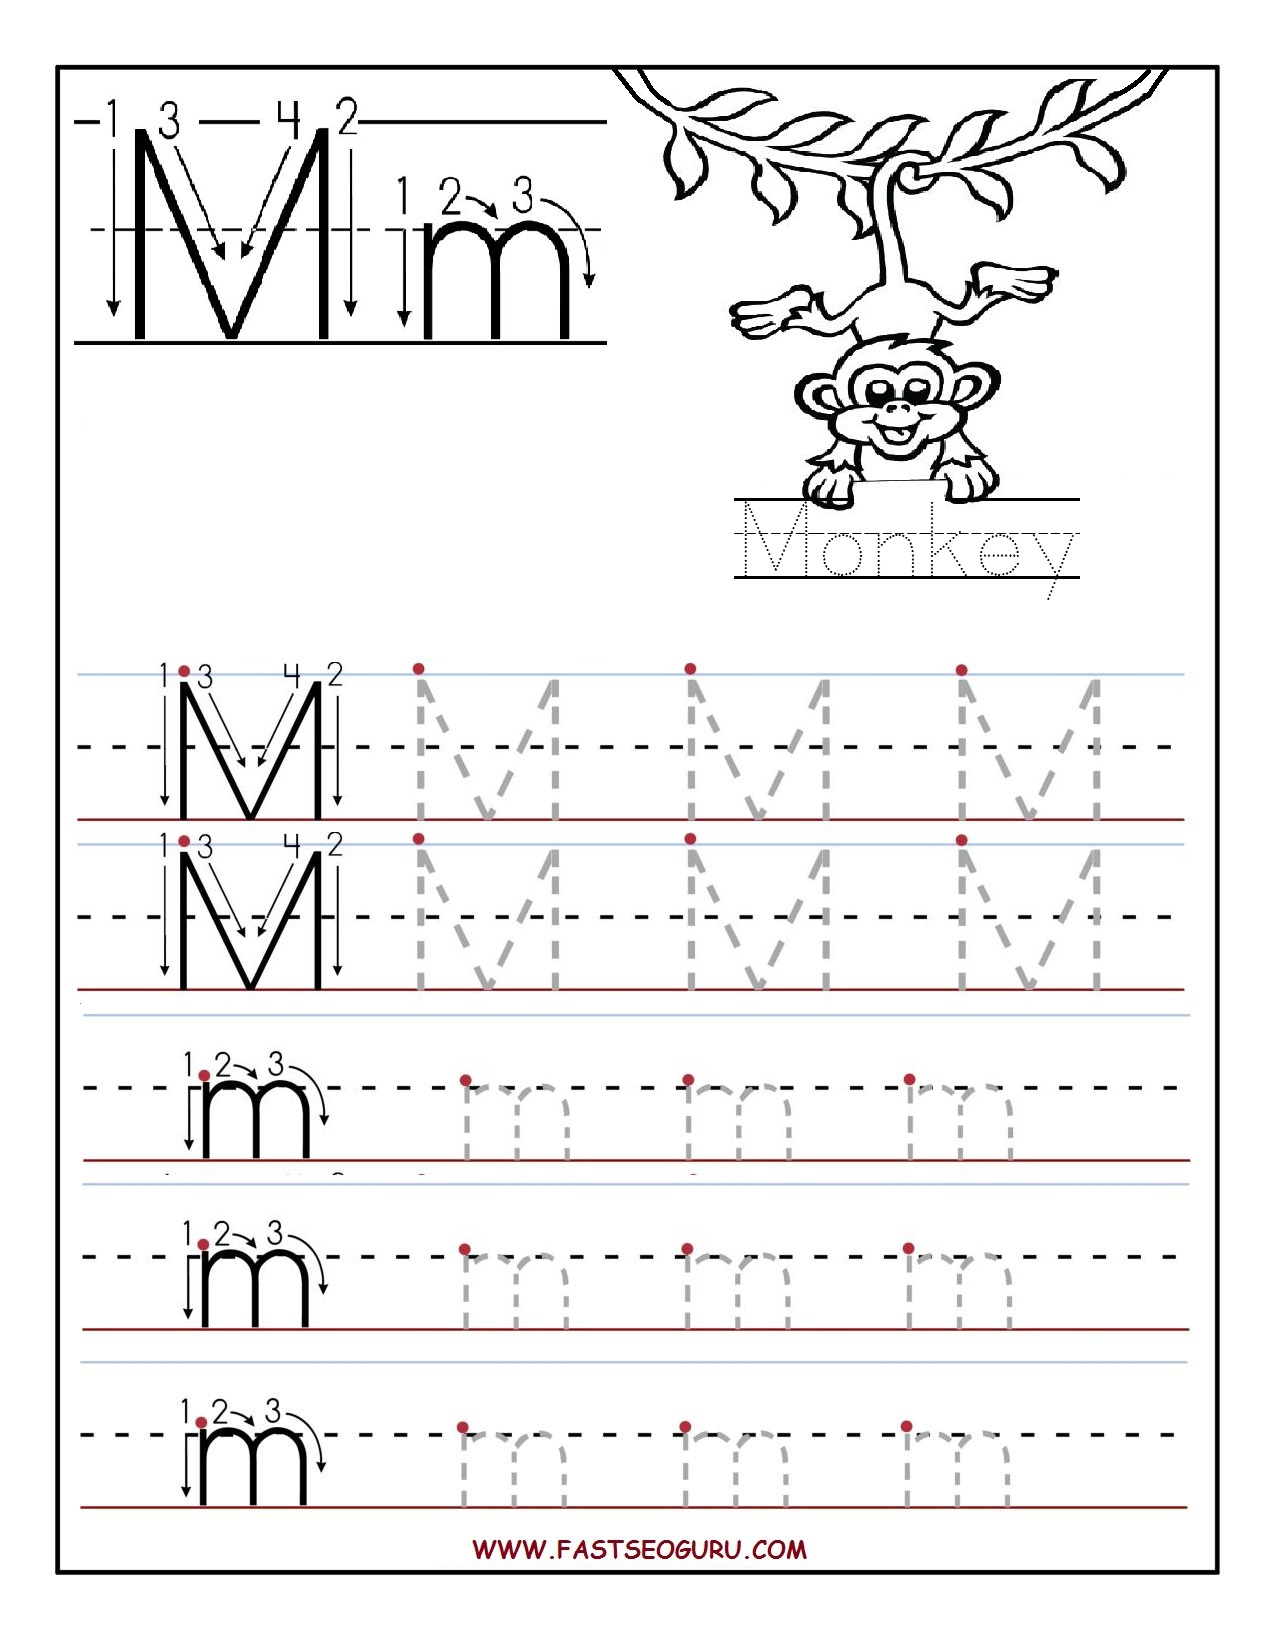 Letter M Tracing Worksheets Preschool